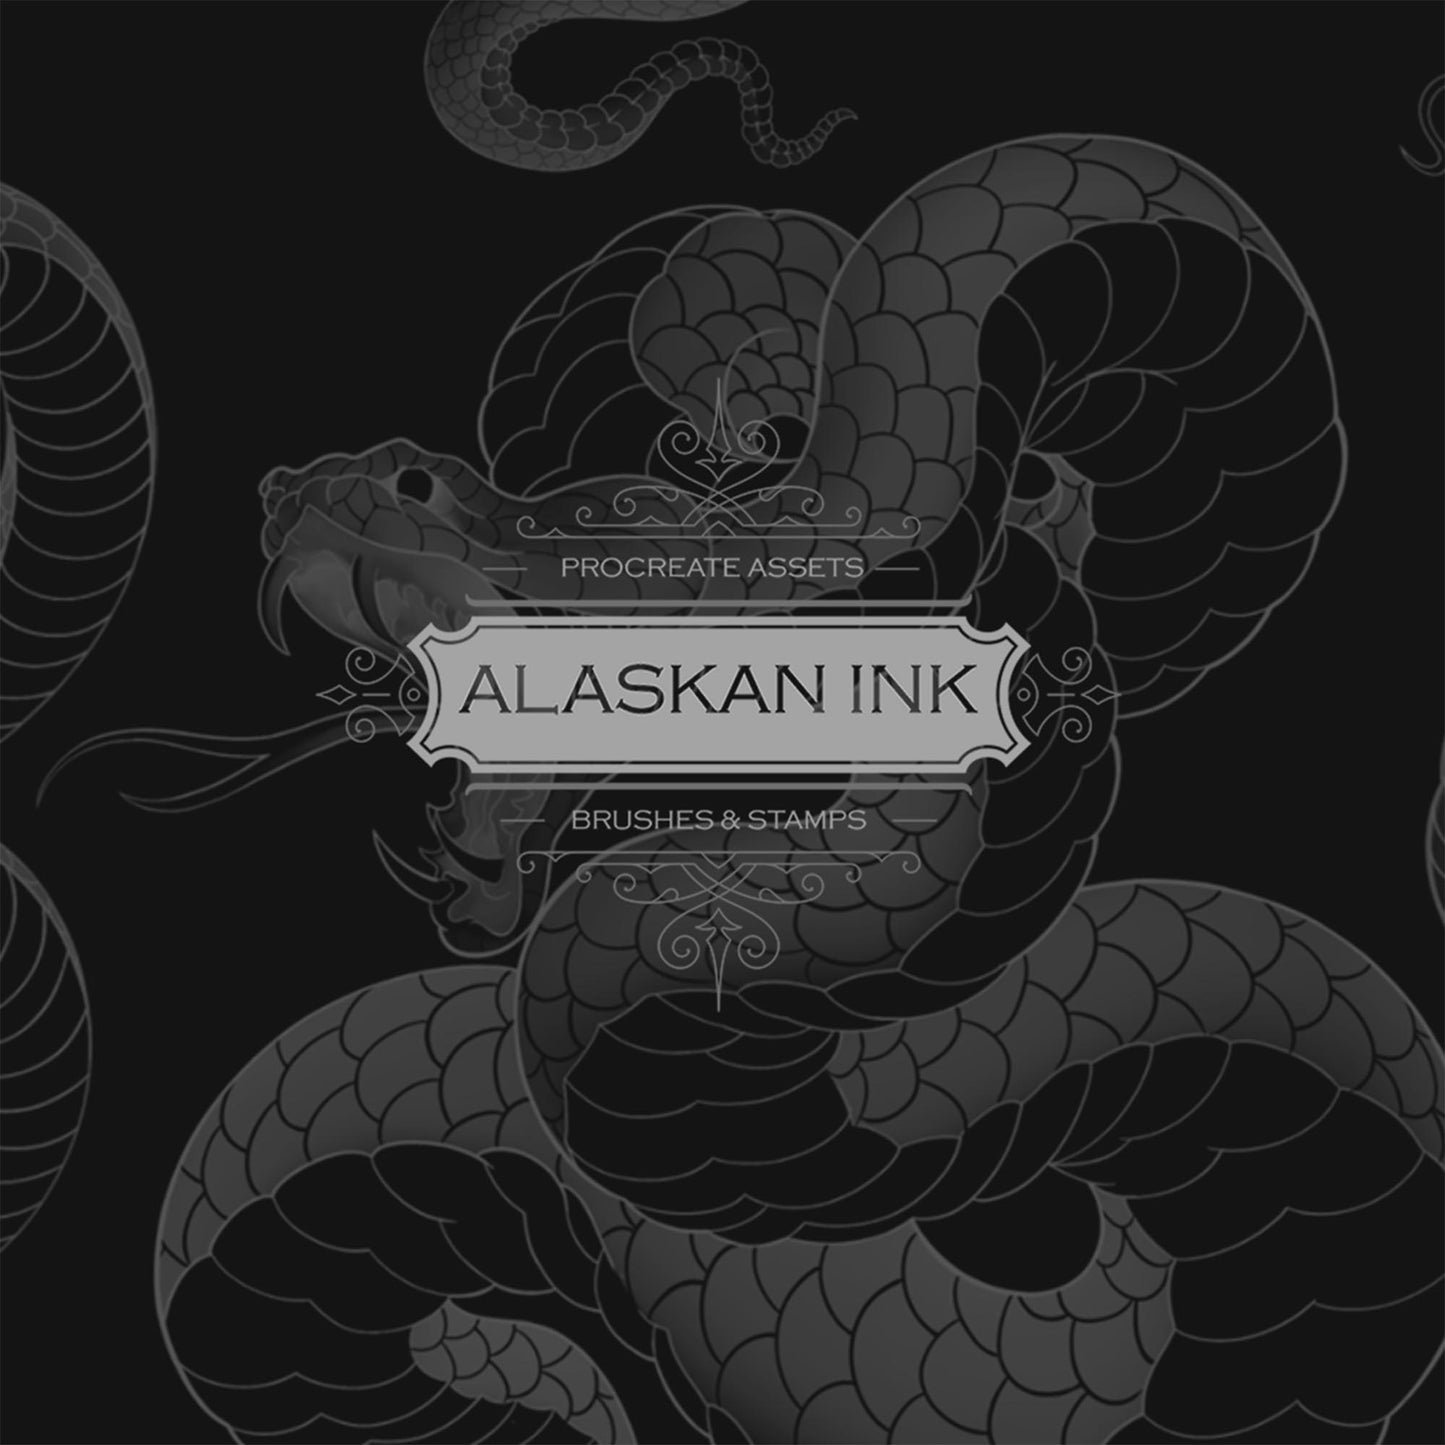 35 Wings Tattoo Brushset for Procreate app by Alaskan ink studio